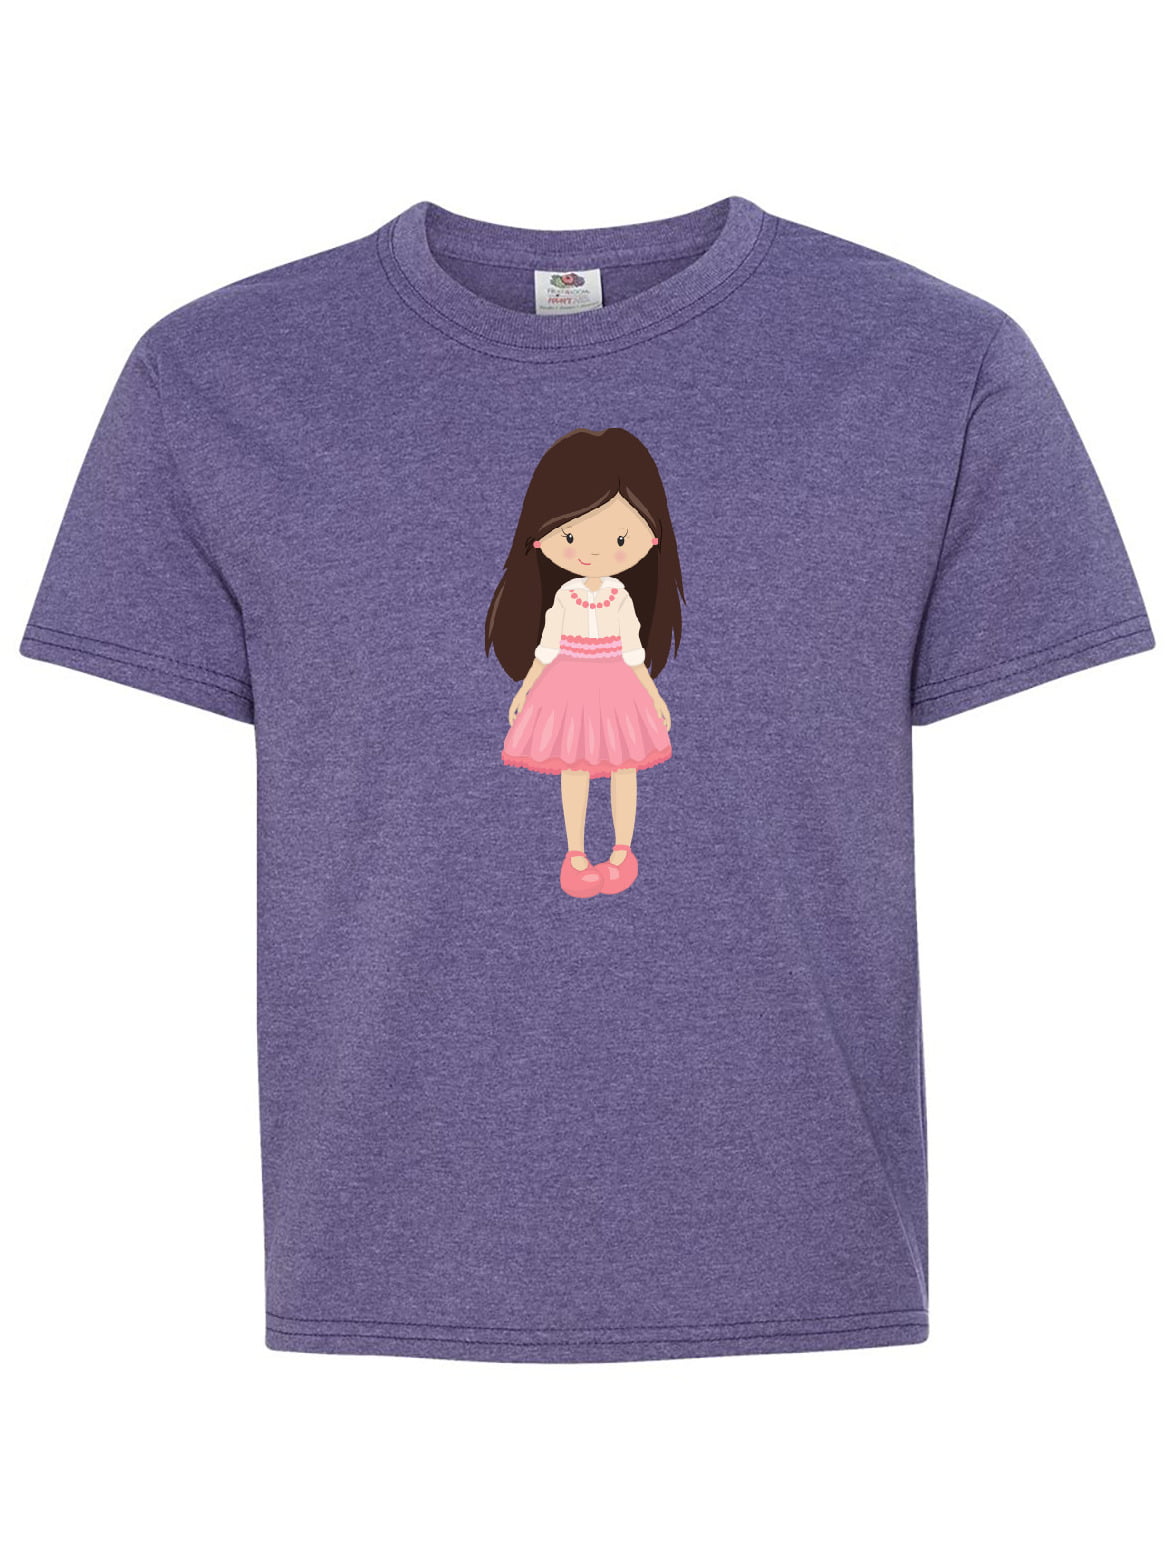 Brown Hair Purple Coat Boots Toddler T-Shirt inktastic Fashion Girl 